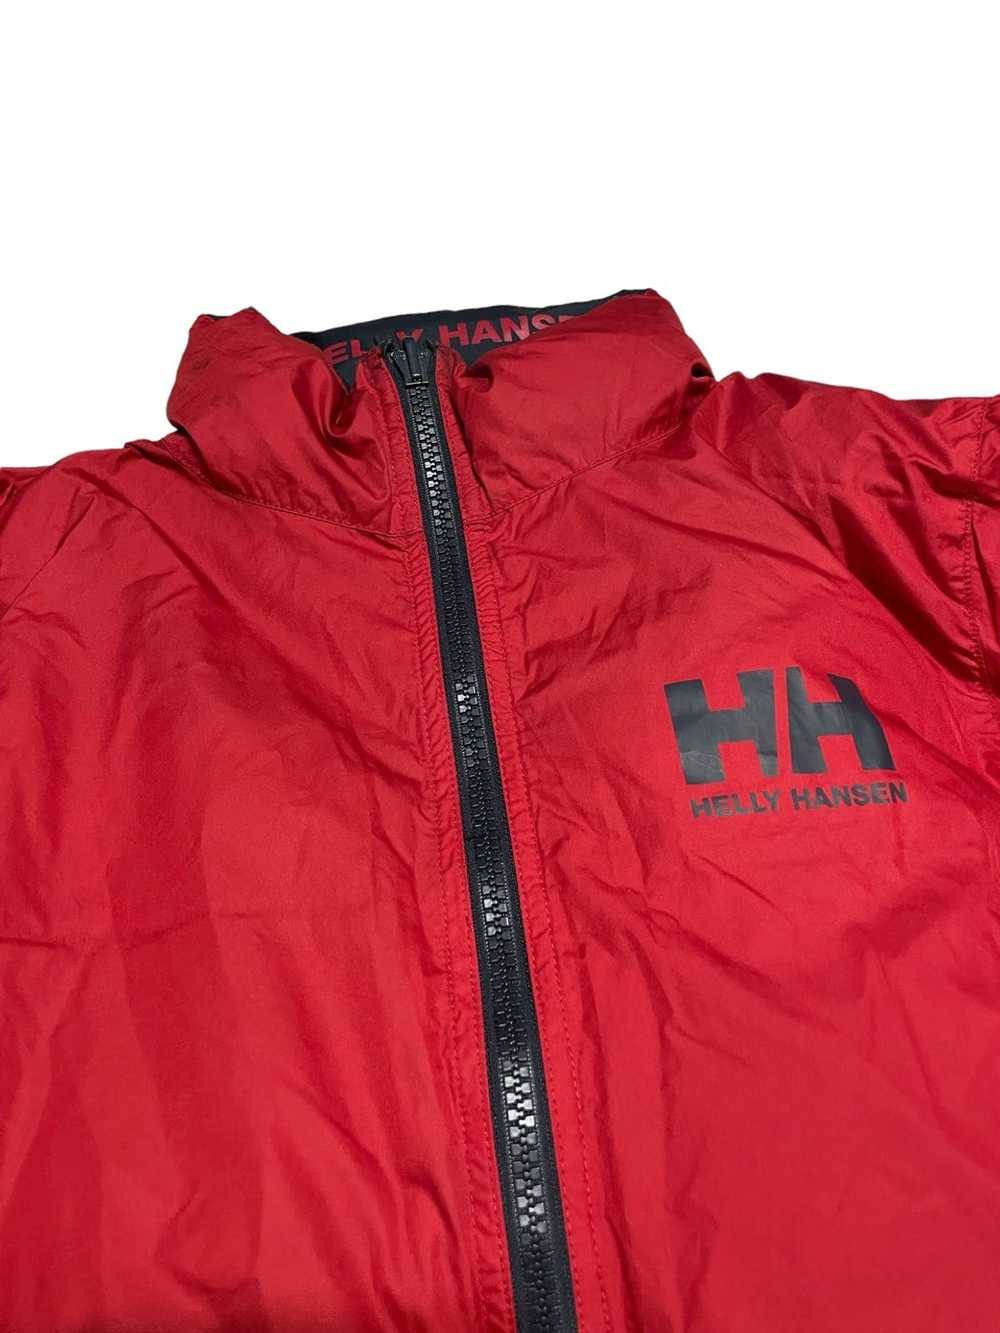 Helly Hansen Helly Hansen Reversible Puffer Jacket - image 5